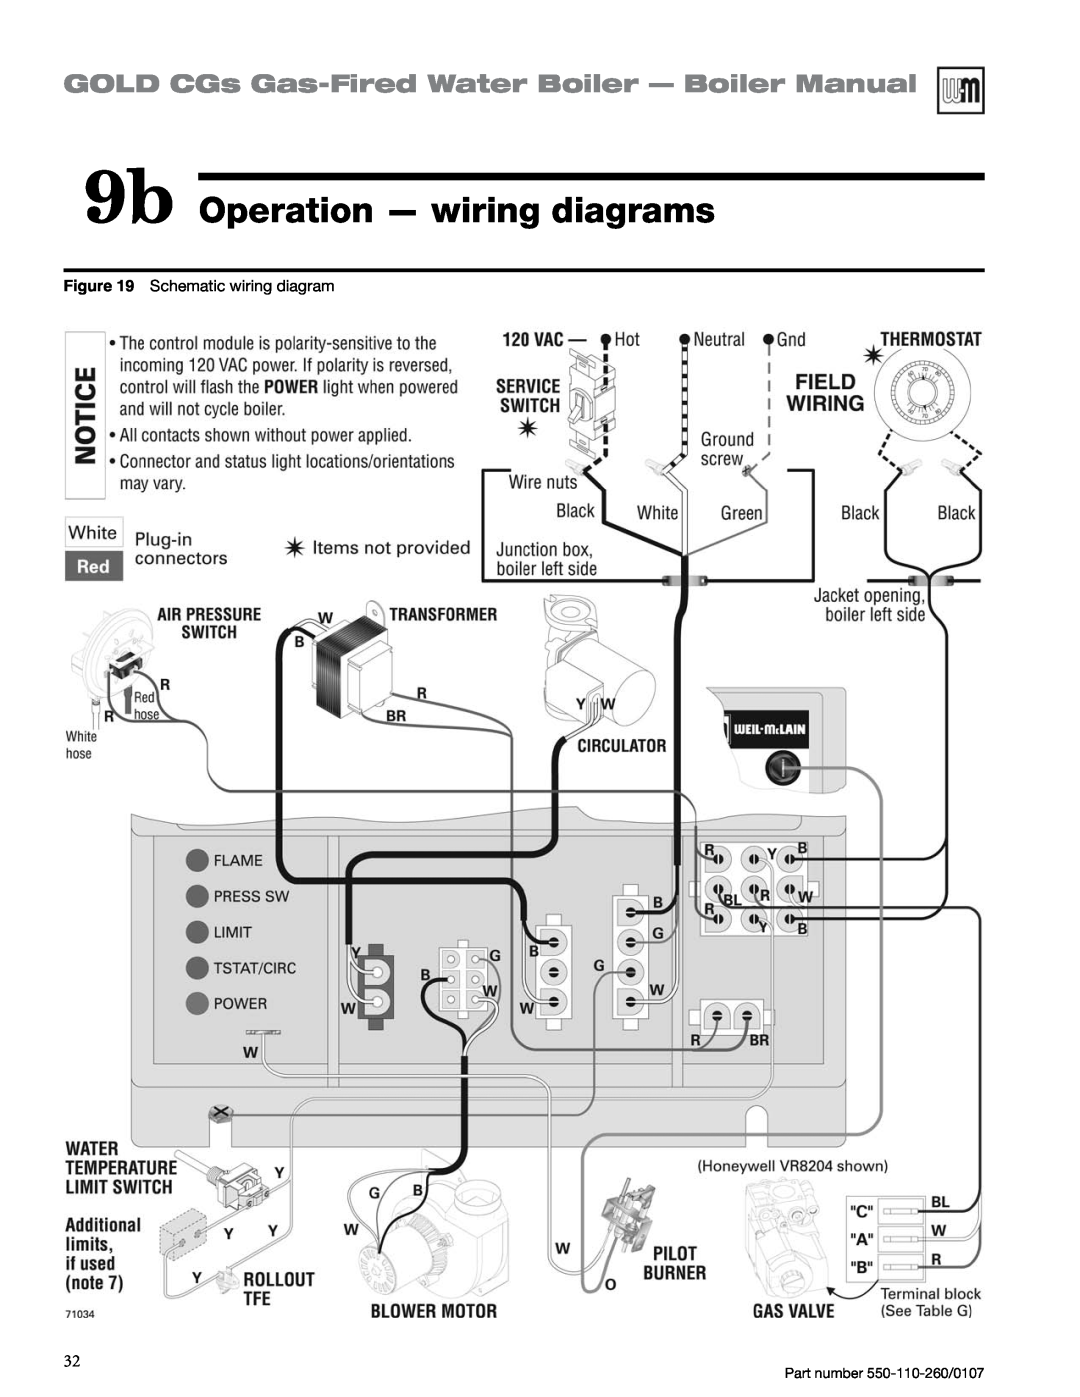 Weil-McLain 550-110-260/0107 manual 9b Operation — wiring diagrams, GOLD CGs Gas-FiredWater Boiler — Boiler Manual 